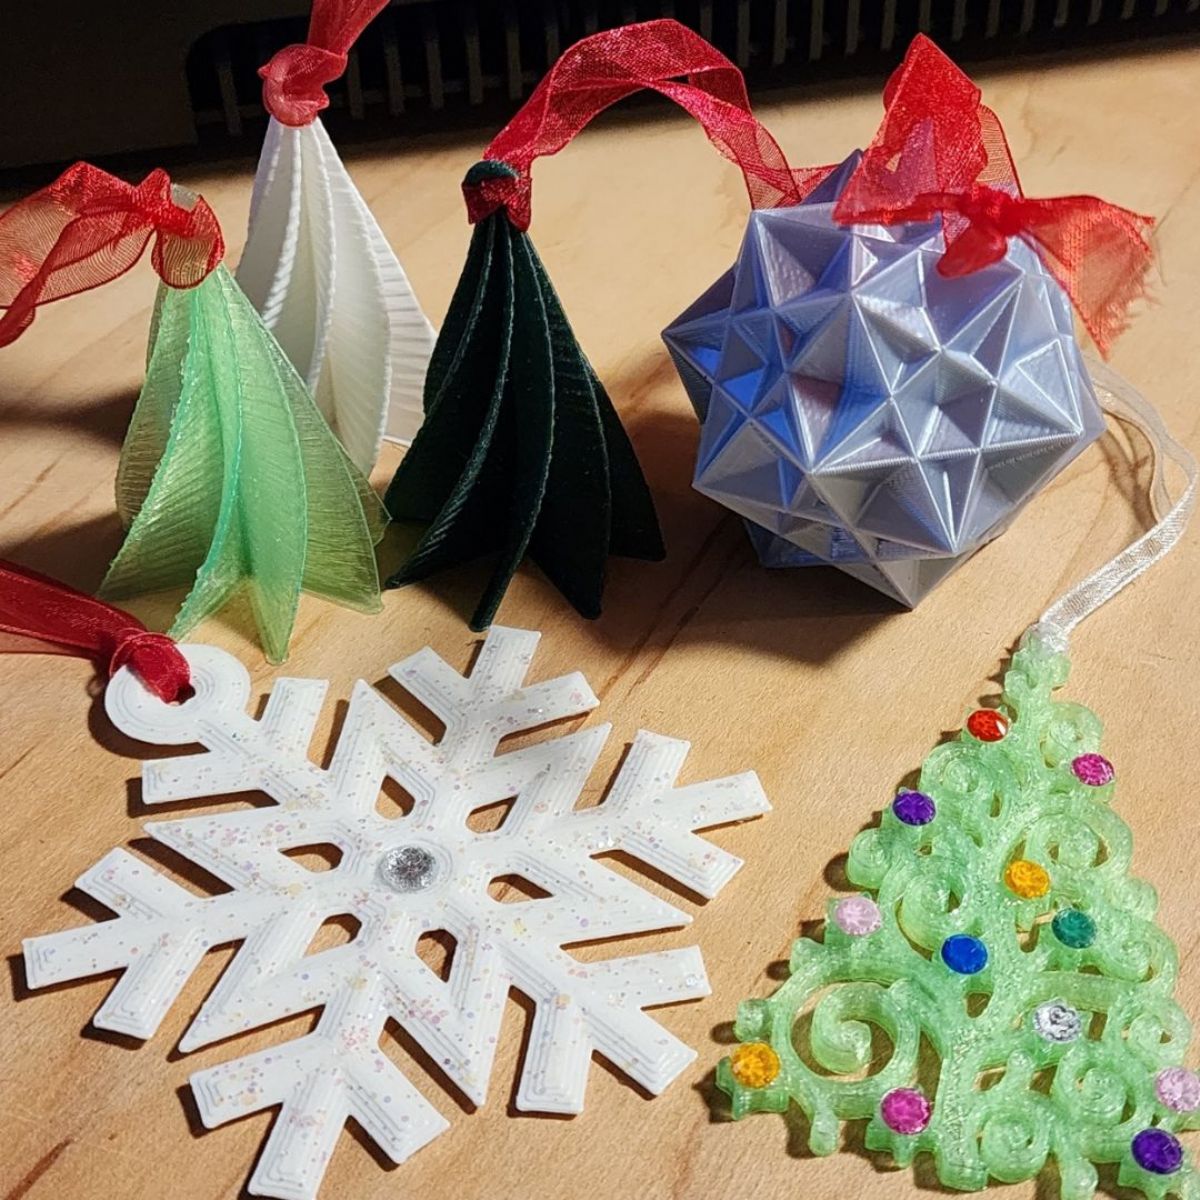 3D Printed Holiday Ornaments